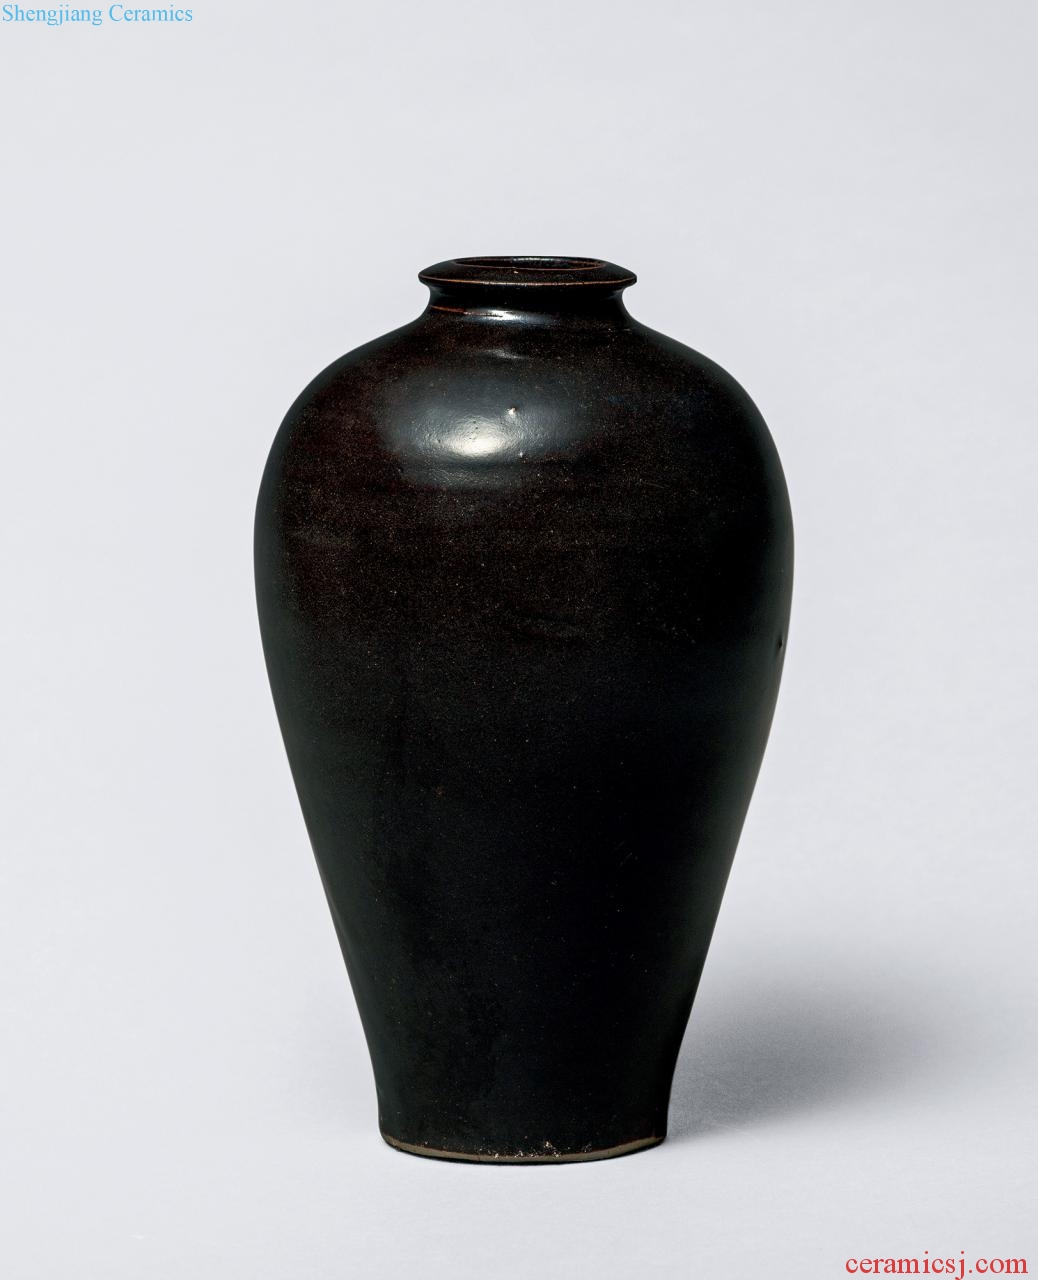 Gold (1115-1234), the black glaze plum bottle